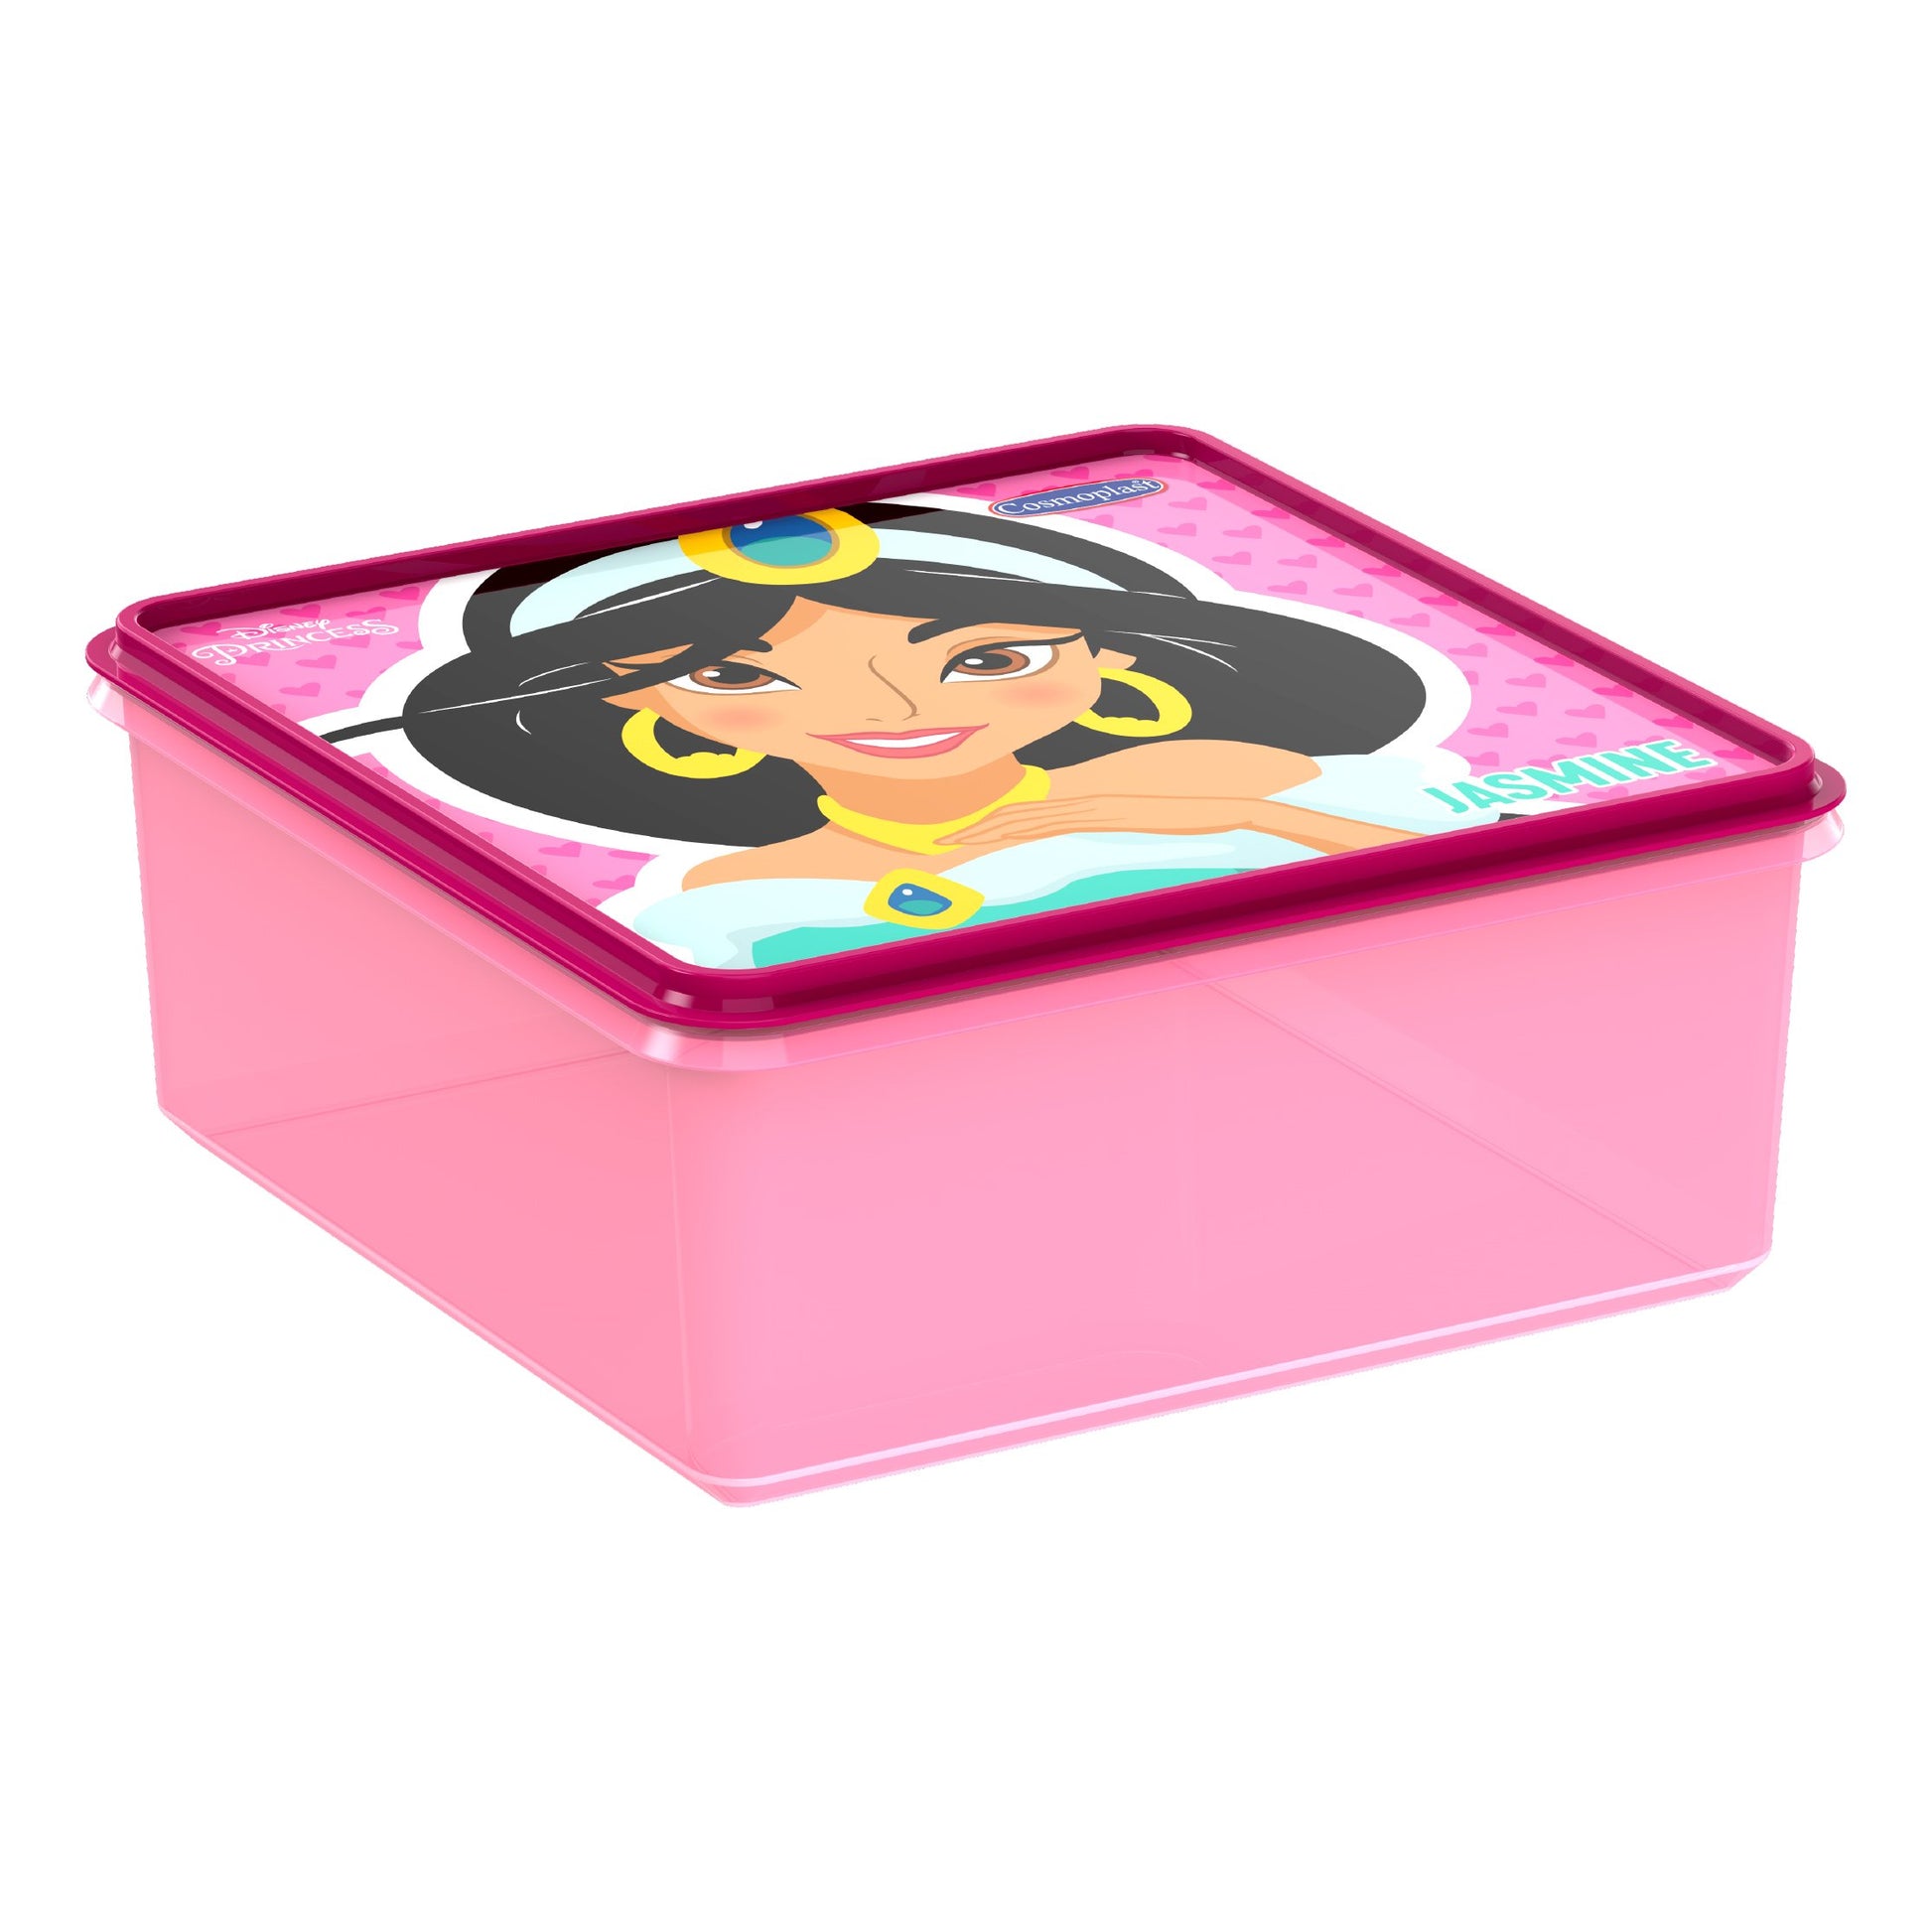 Cosmoplast Disney Princess Storage Box 10 Liters